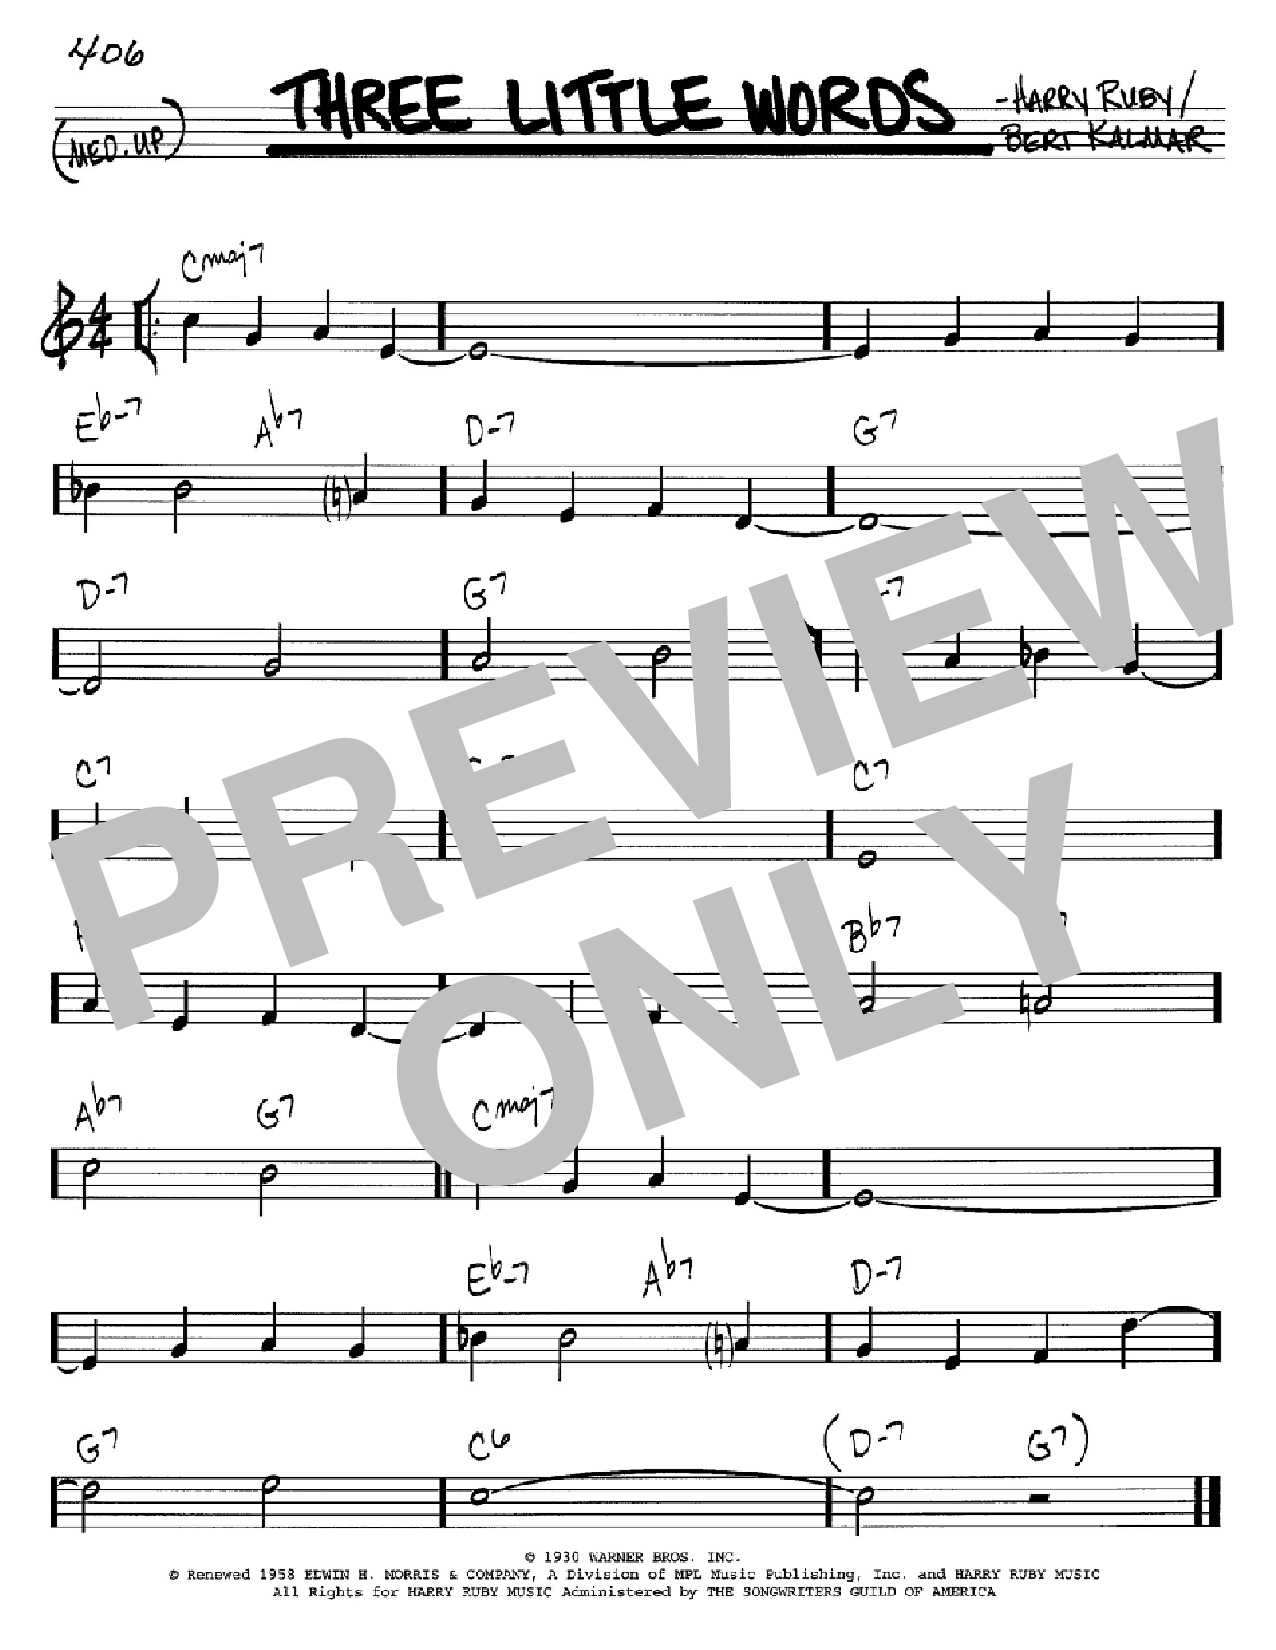 Bert Kalmar Three Little Words Sheet Music Notes & Chords for Real Book – Melody, Lyrics & Chords - Download or Print PDF